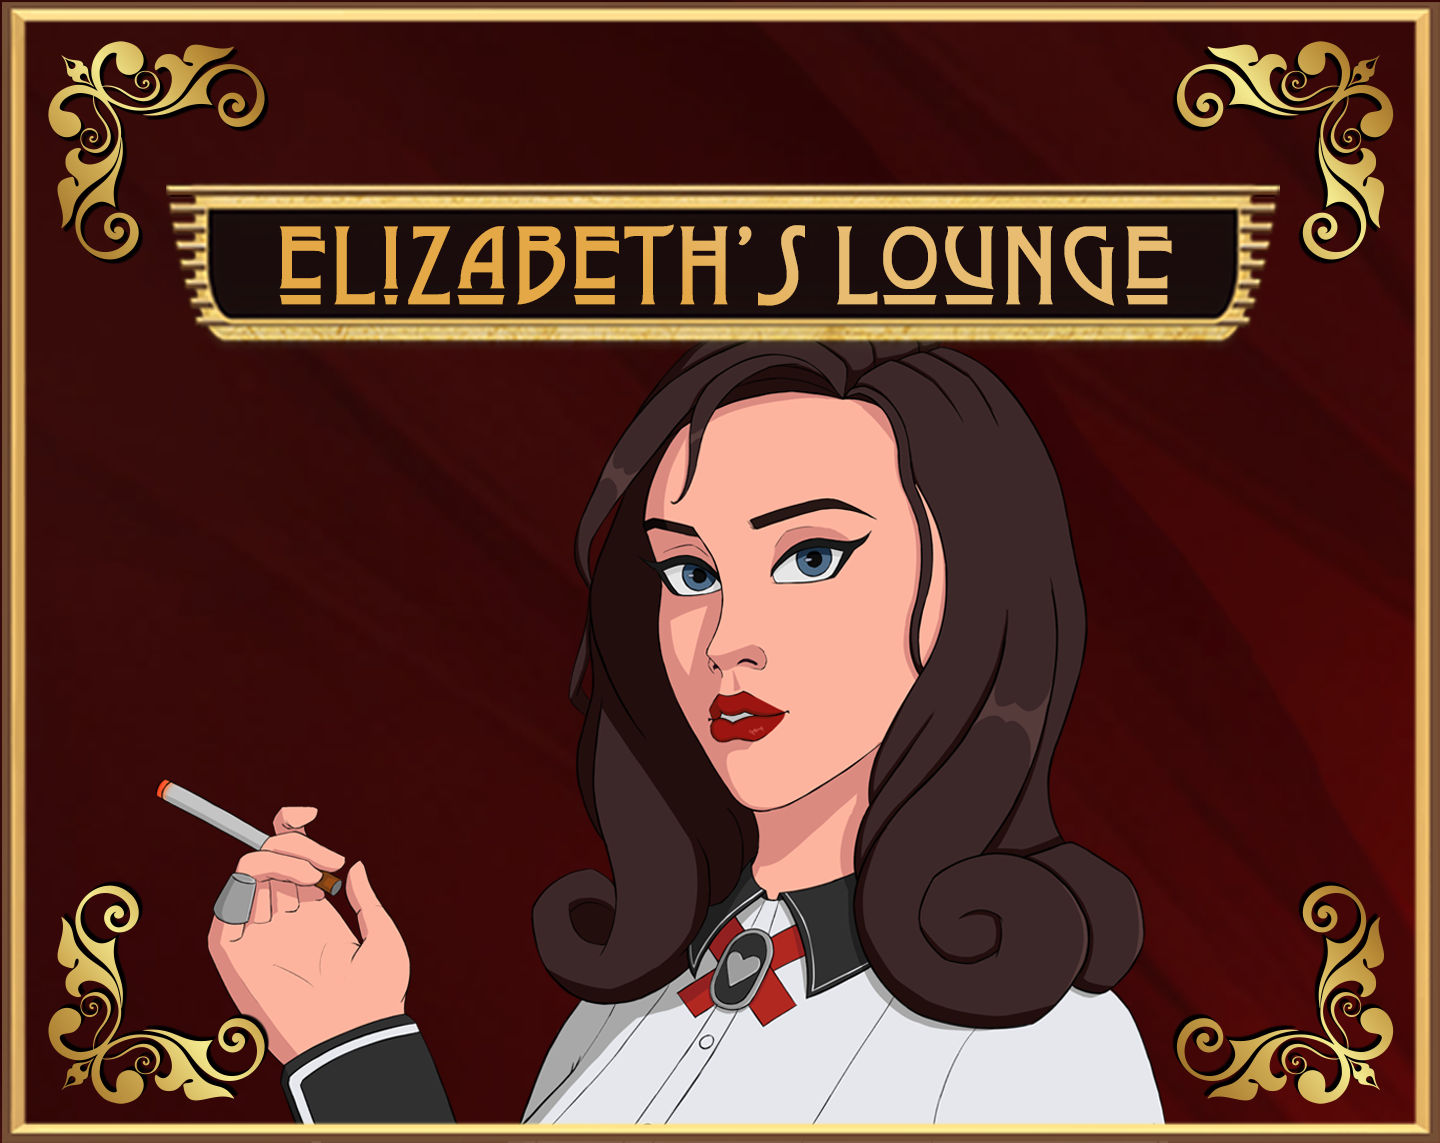 Elizabeth's Lounge